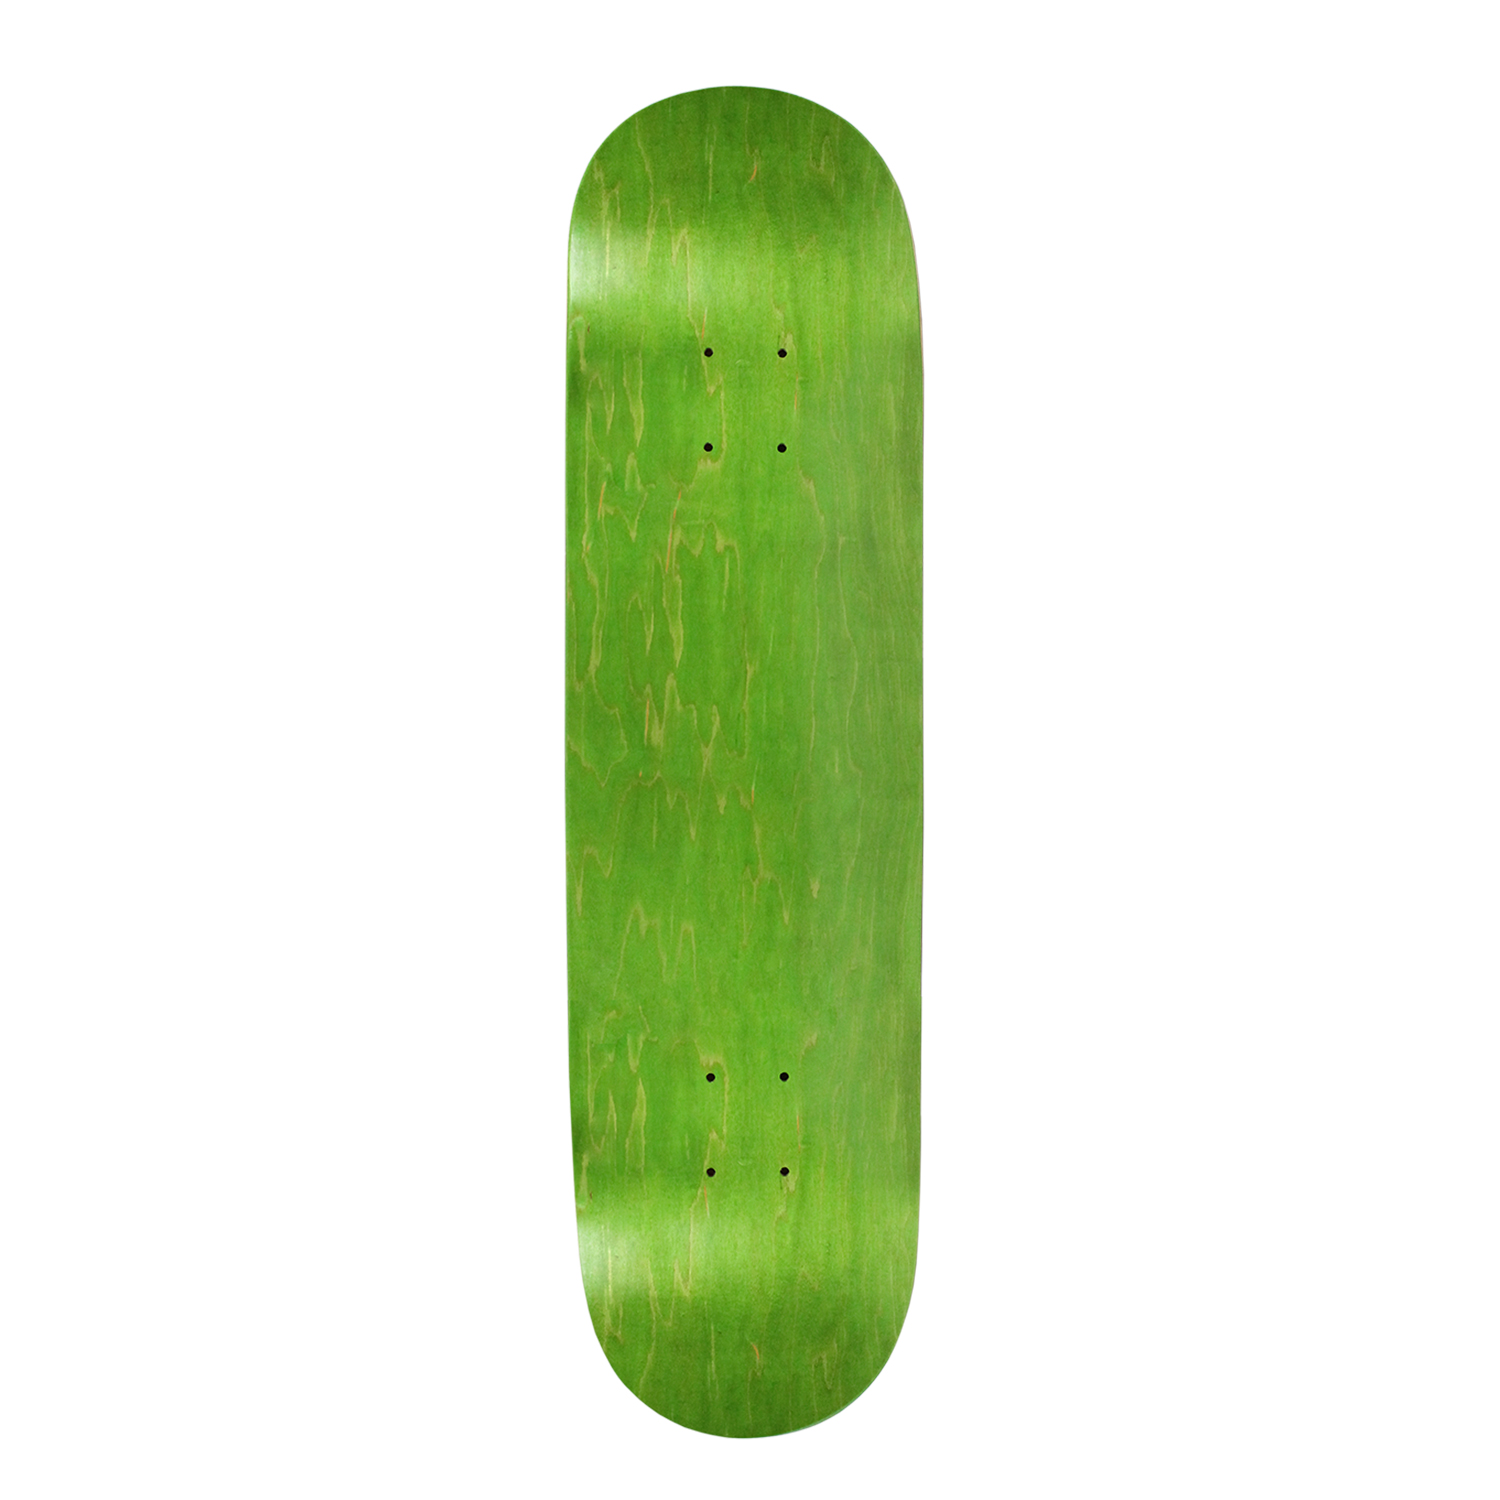 shiny lime green skateboard